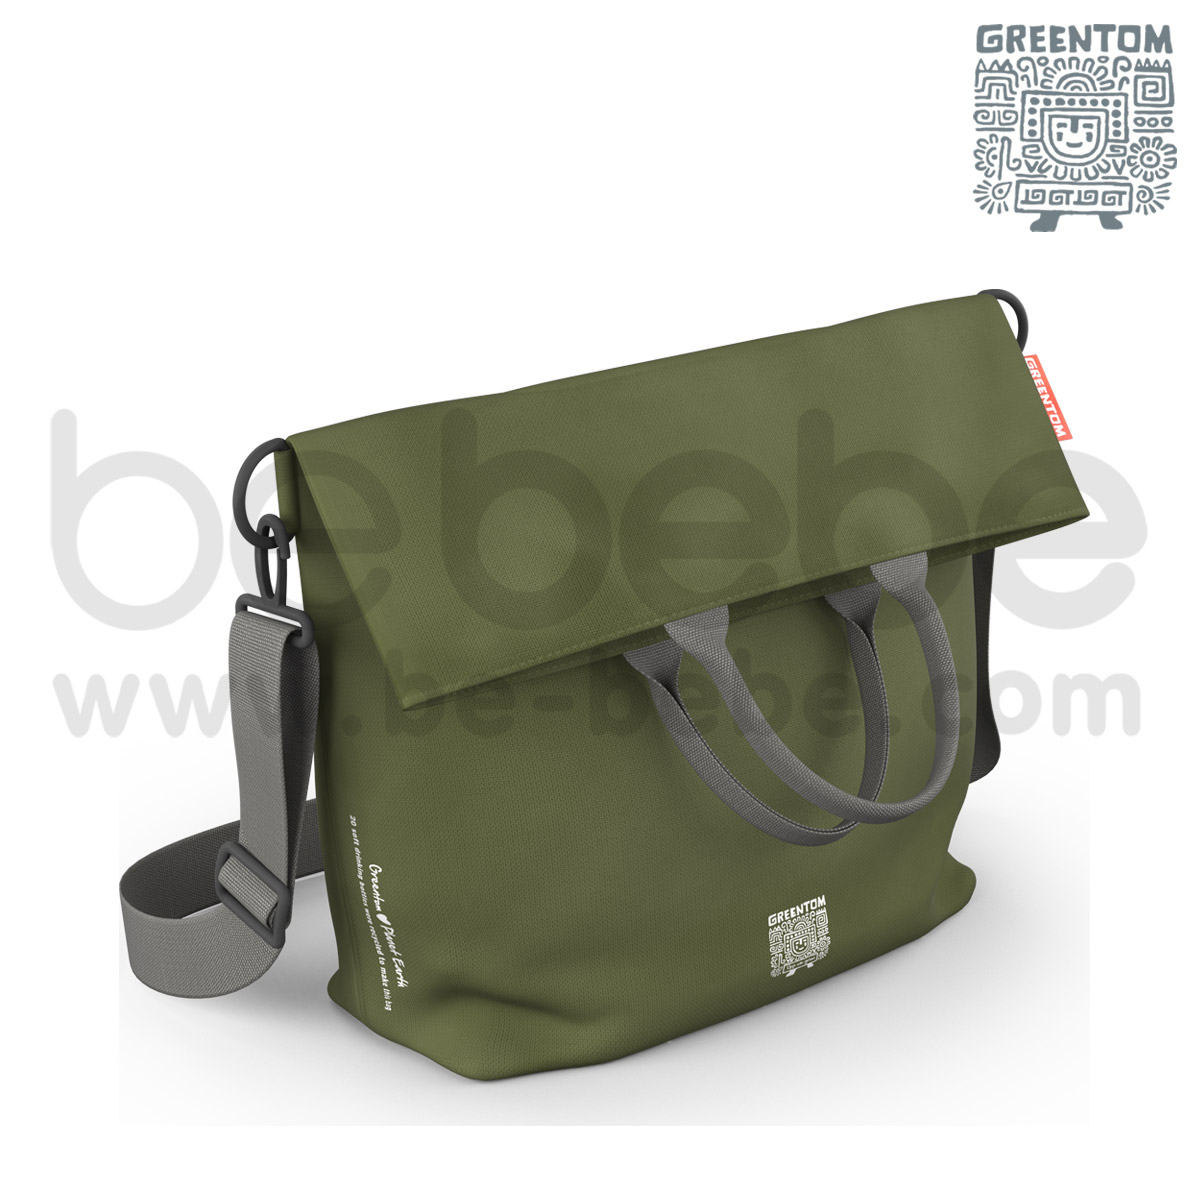 Greentom : Diaper Bag / Olive